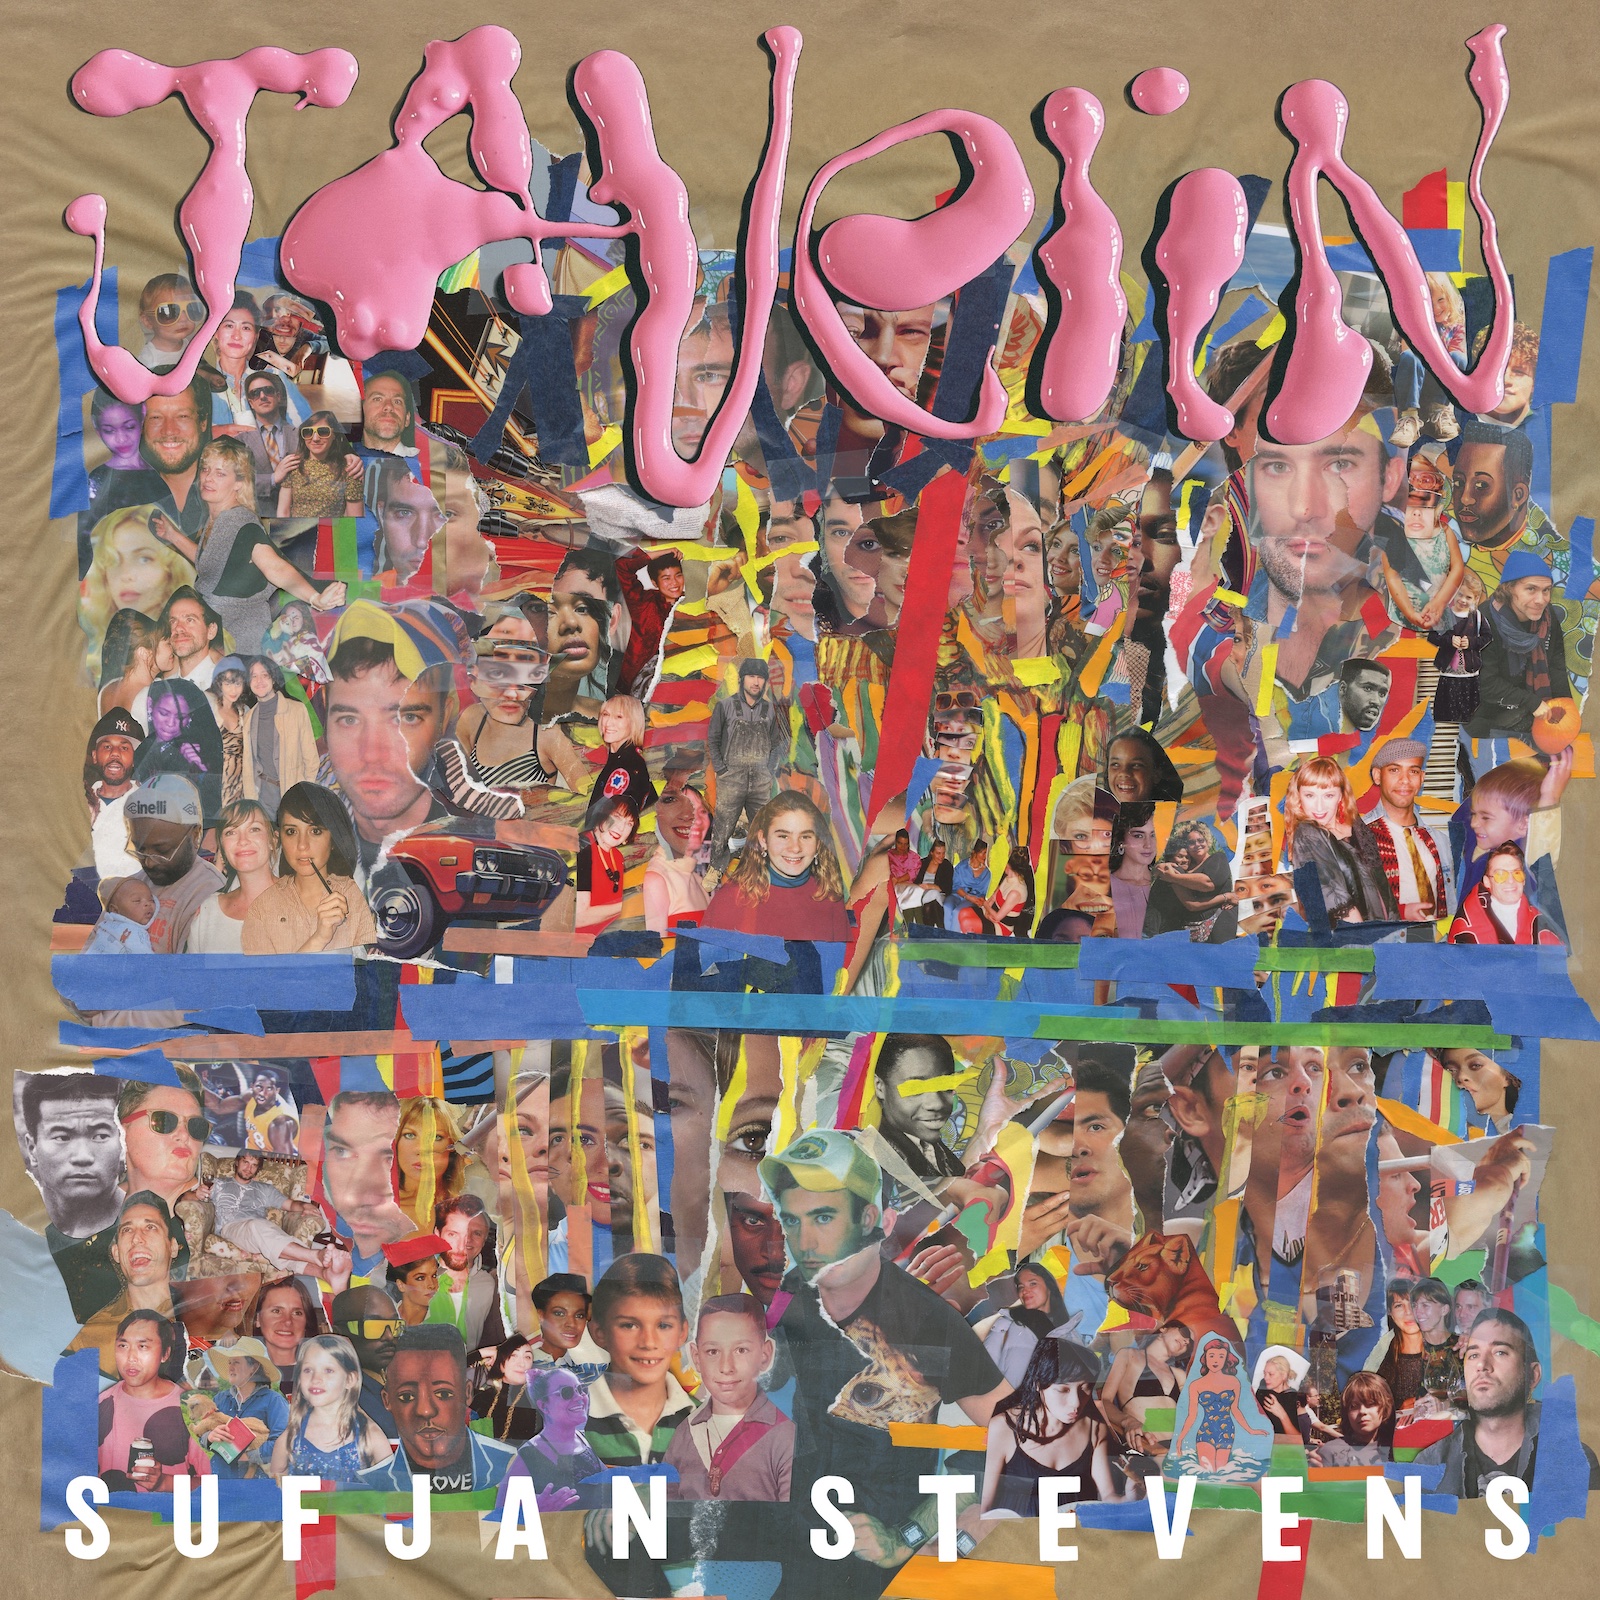 Sufjan Stevens broaches many momentous themes with his new album “Javelin.” (Photo courtesy of Asthmatic Kitty Records)